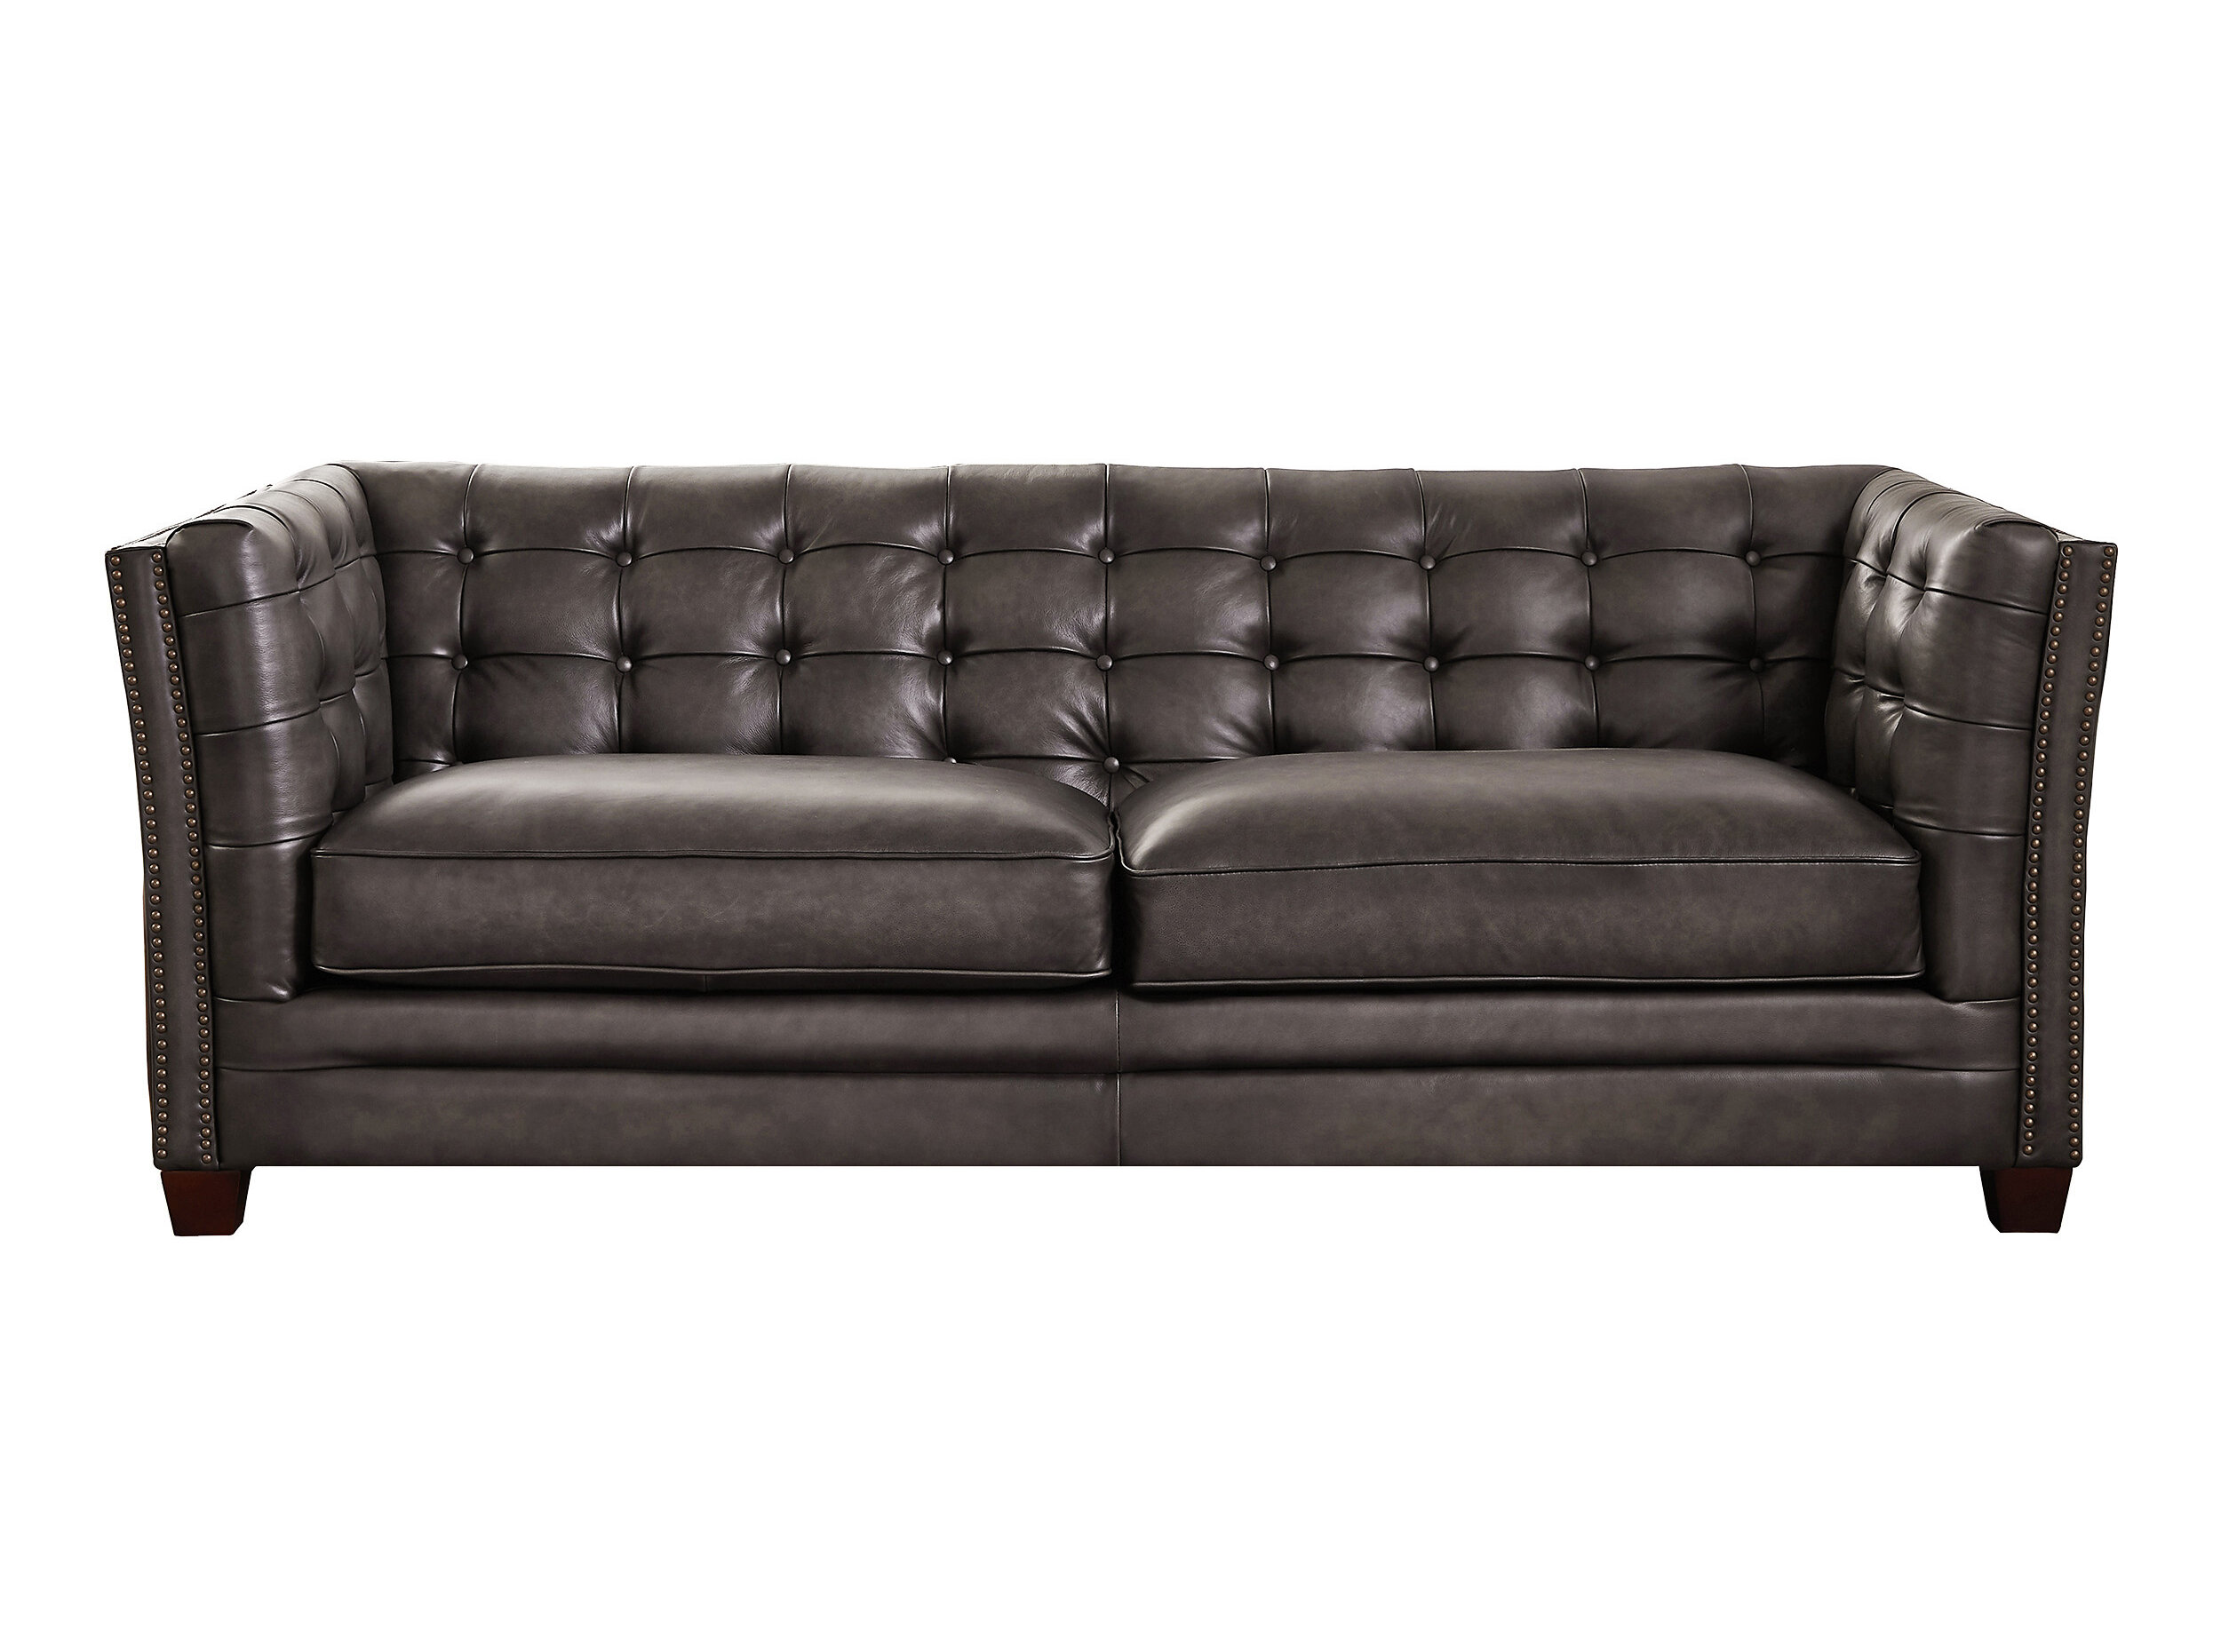 Booth Engage Dismissal Coja Bonita 88'' Leather Sofa | Wayfair